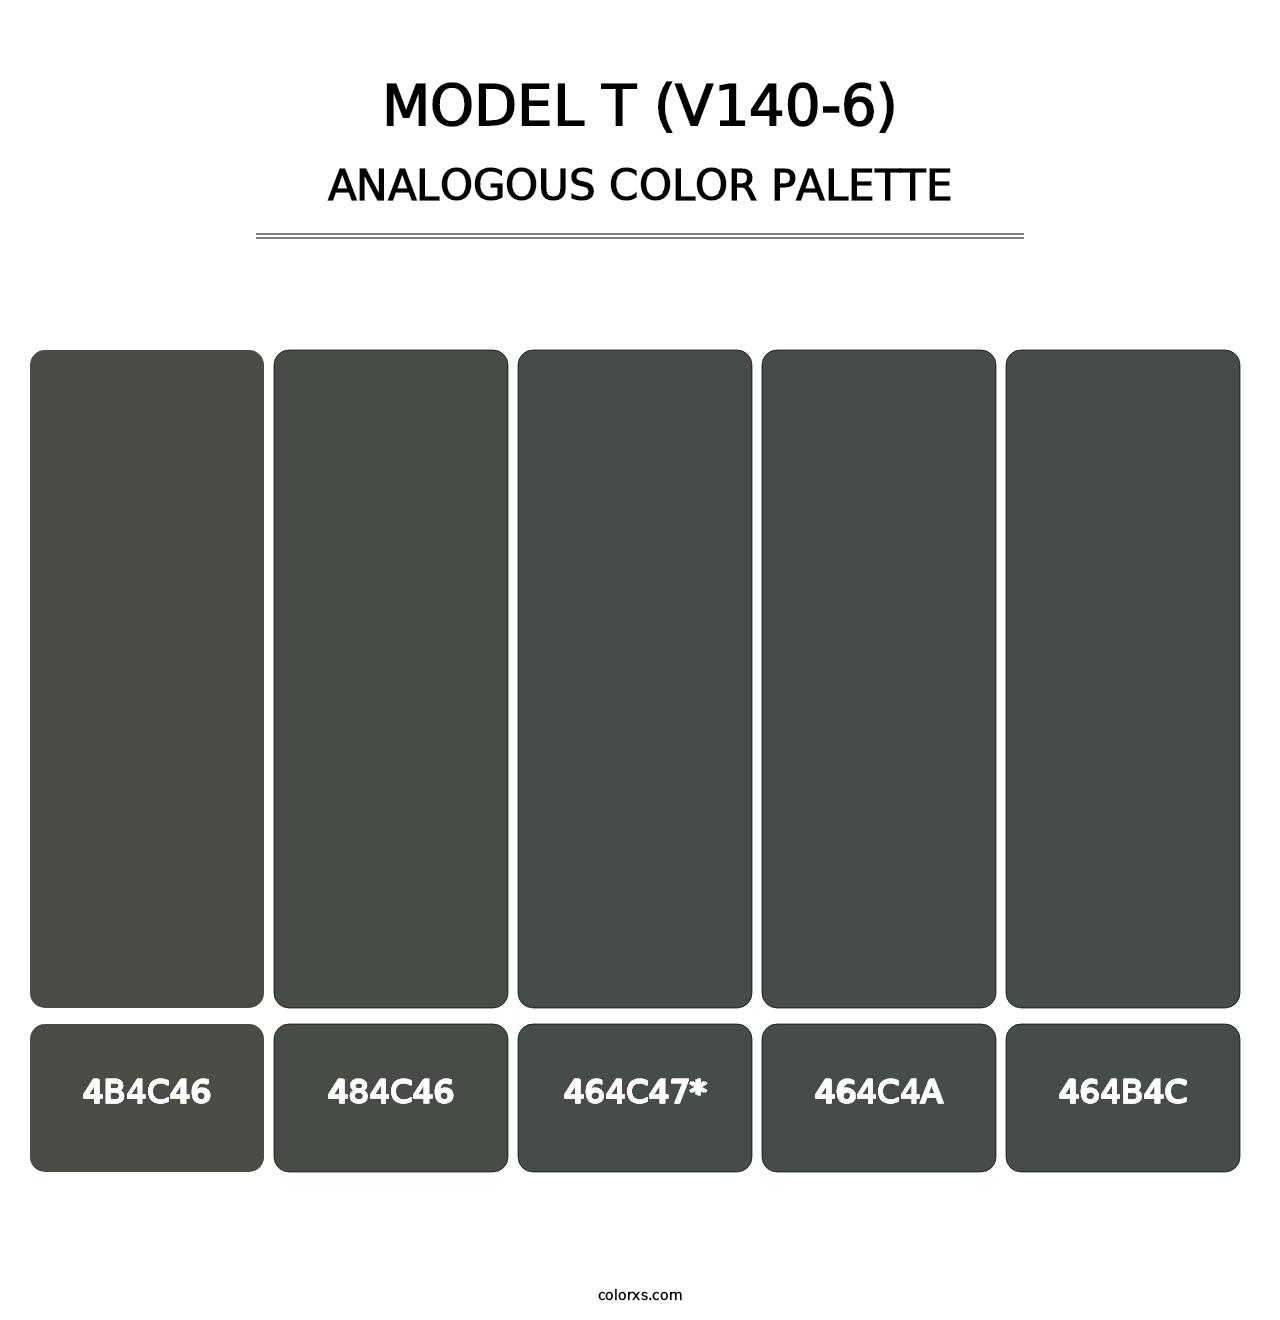 Model T (V140-6) - Analogous Color Palette